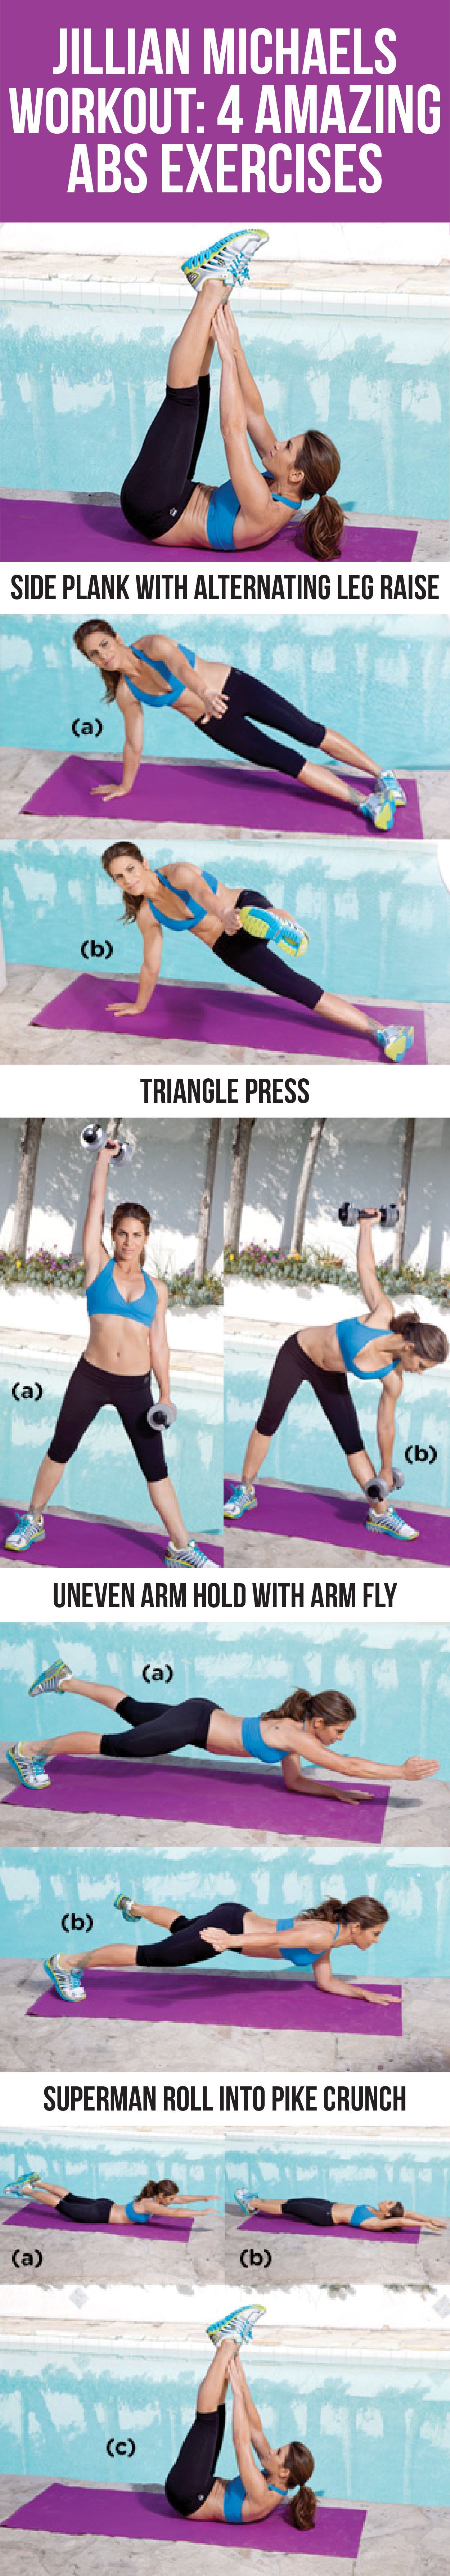 Jillian Michaels Workout: 4 Amazing Abs Exercises